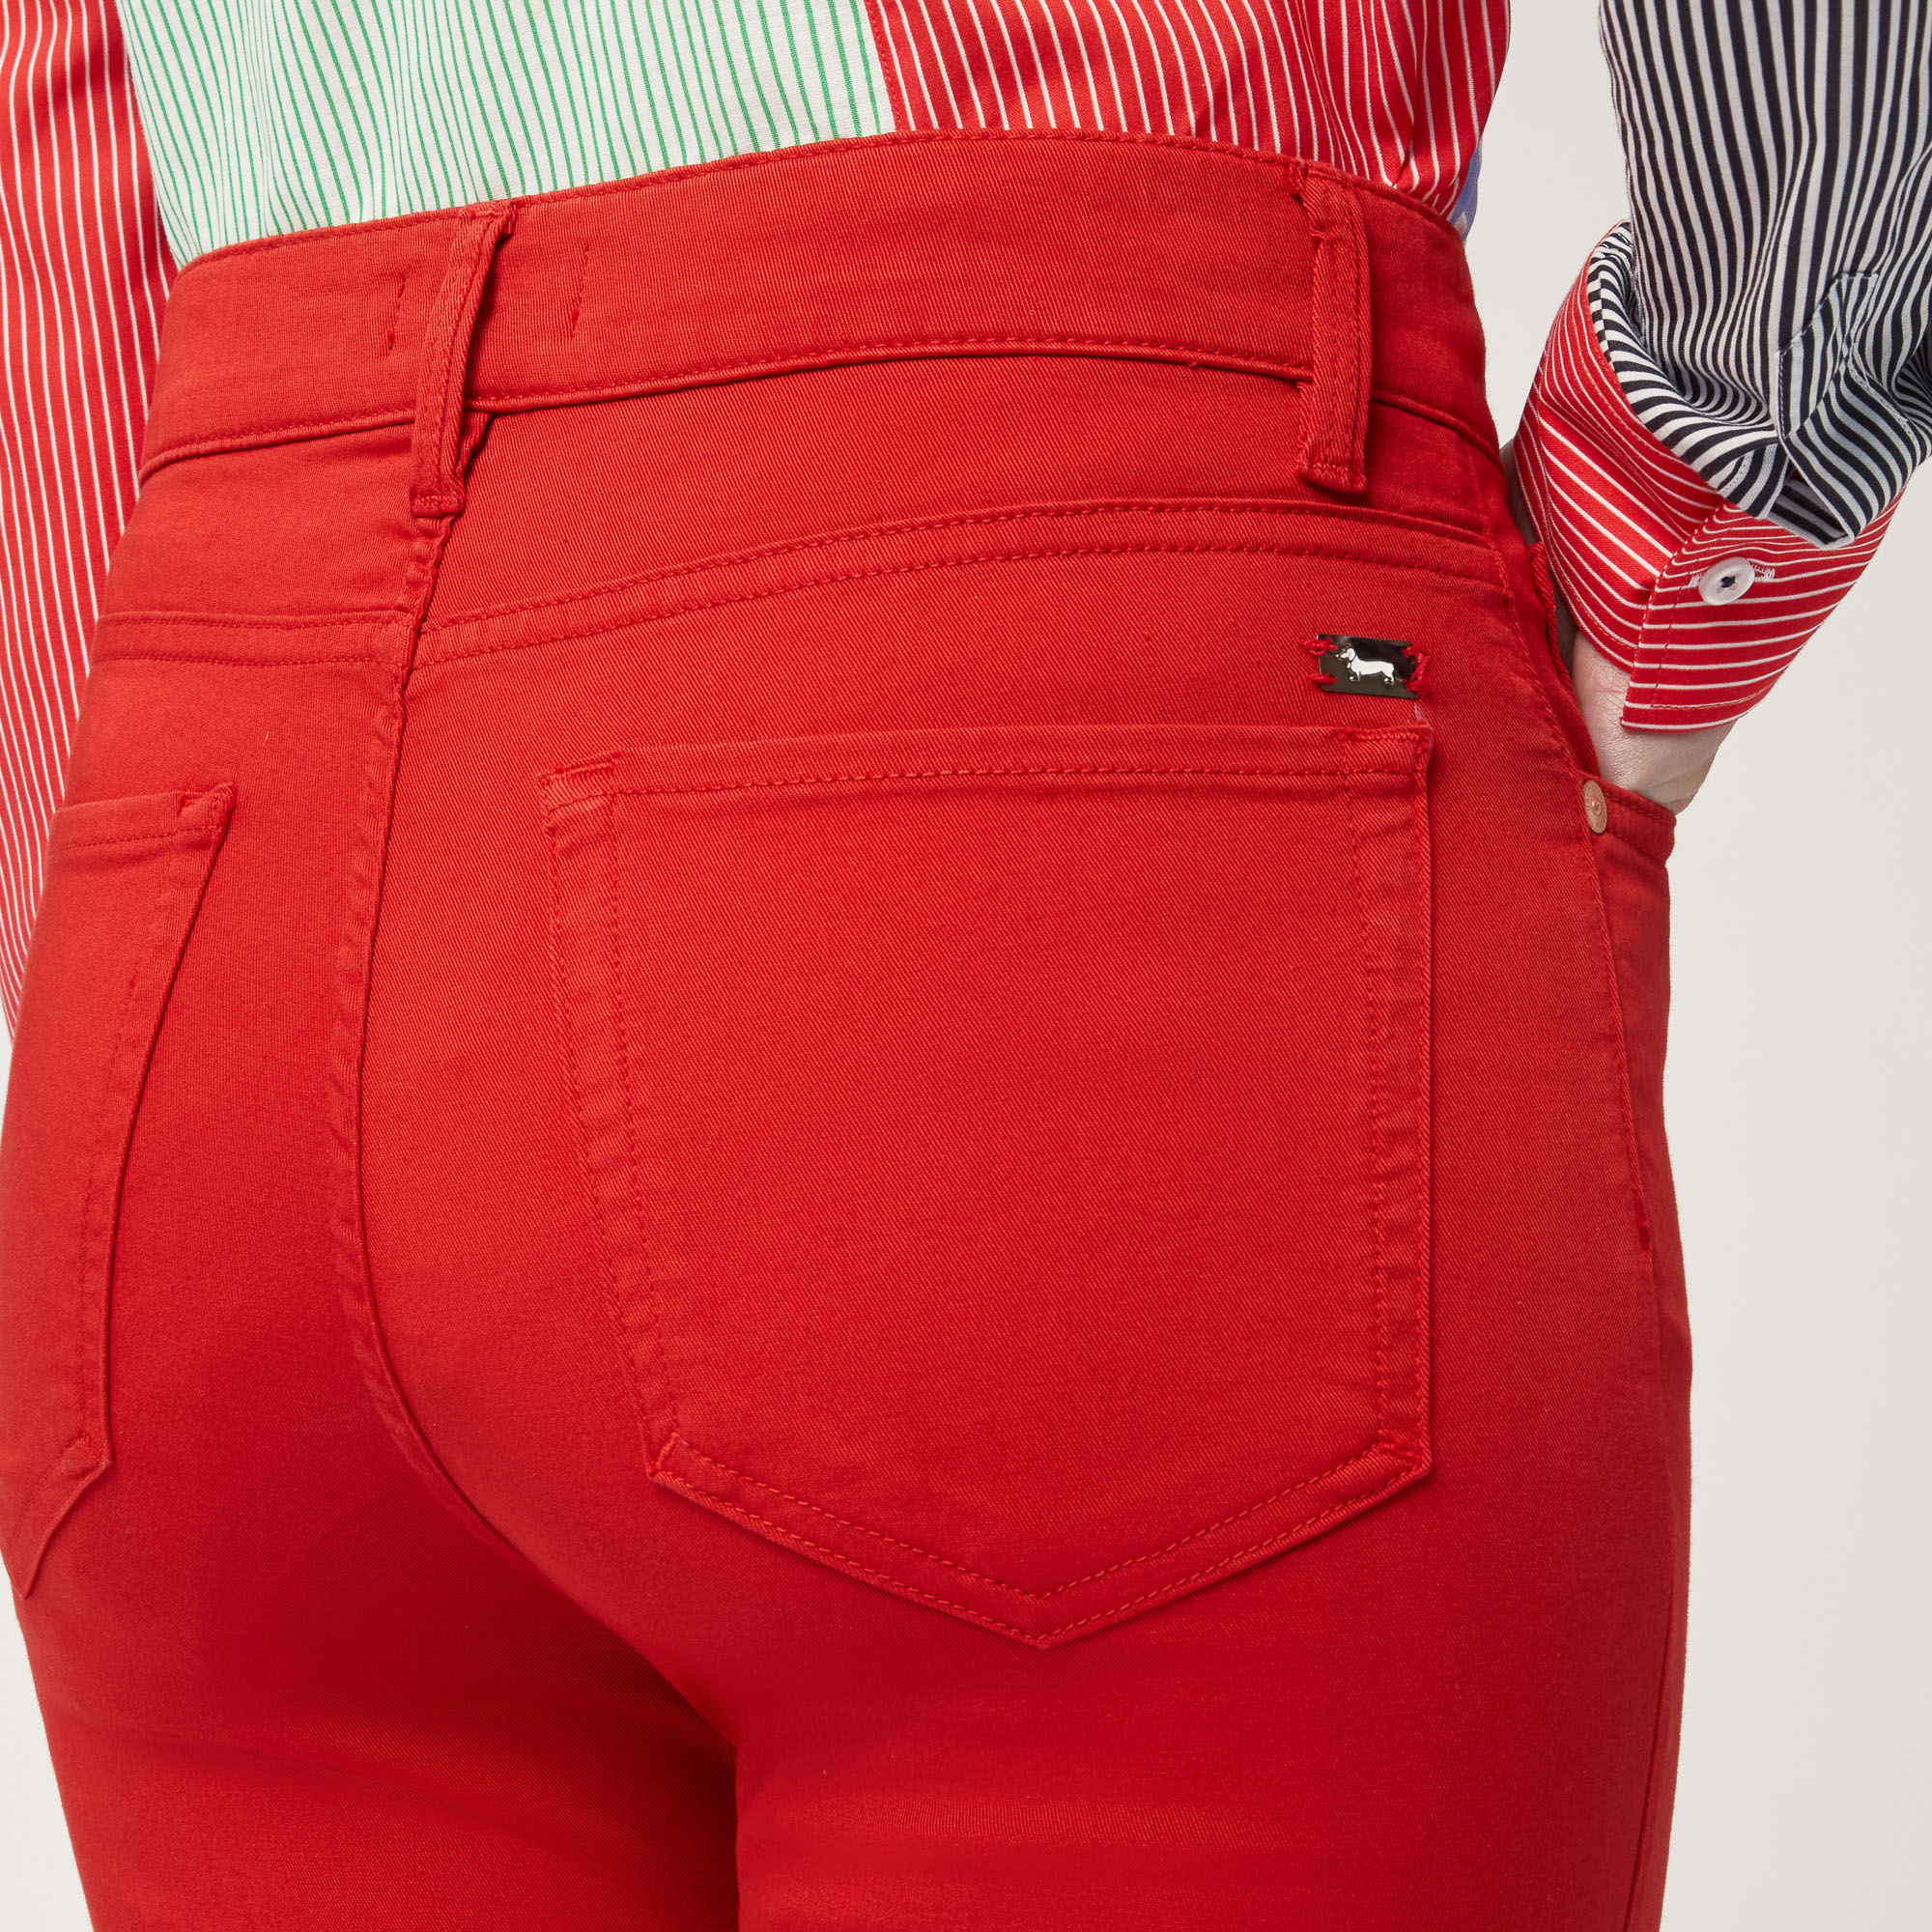 Pantaloni Slim Fit, Rosso Chiaro, large image number 2